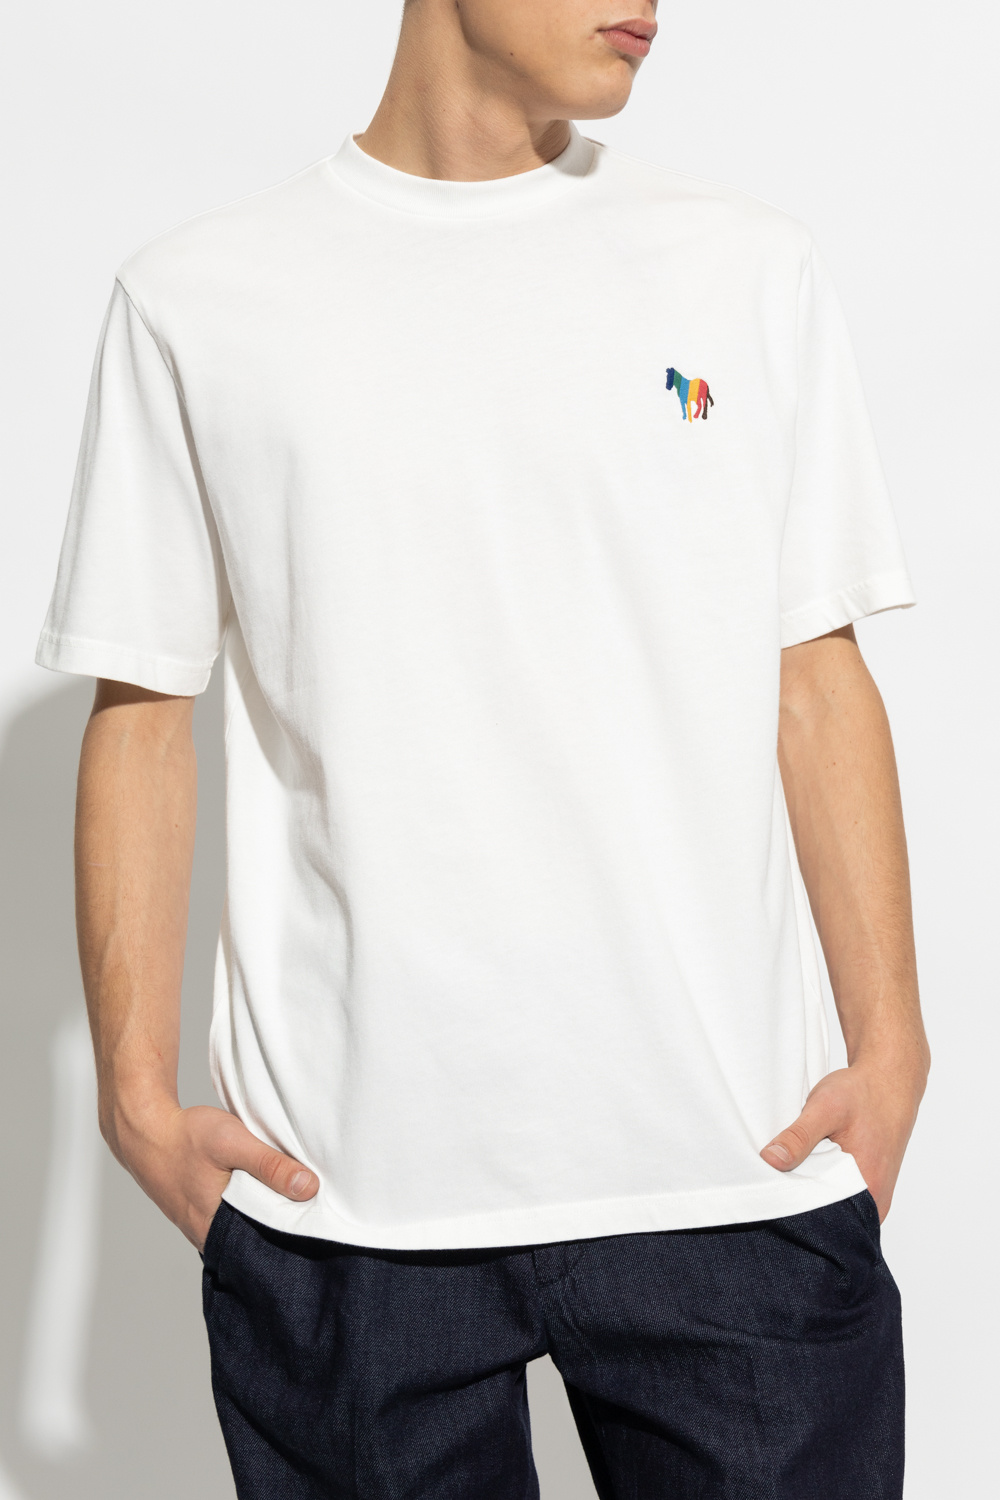 PS Paul Smith Cotton T-shirt